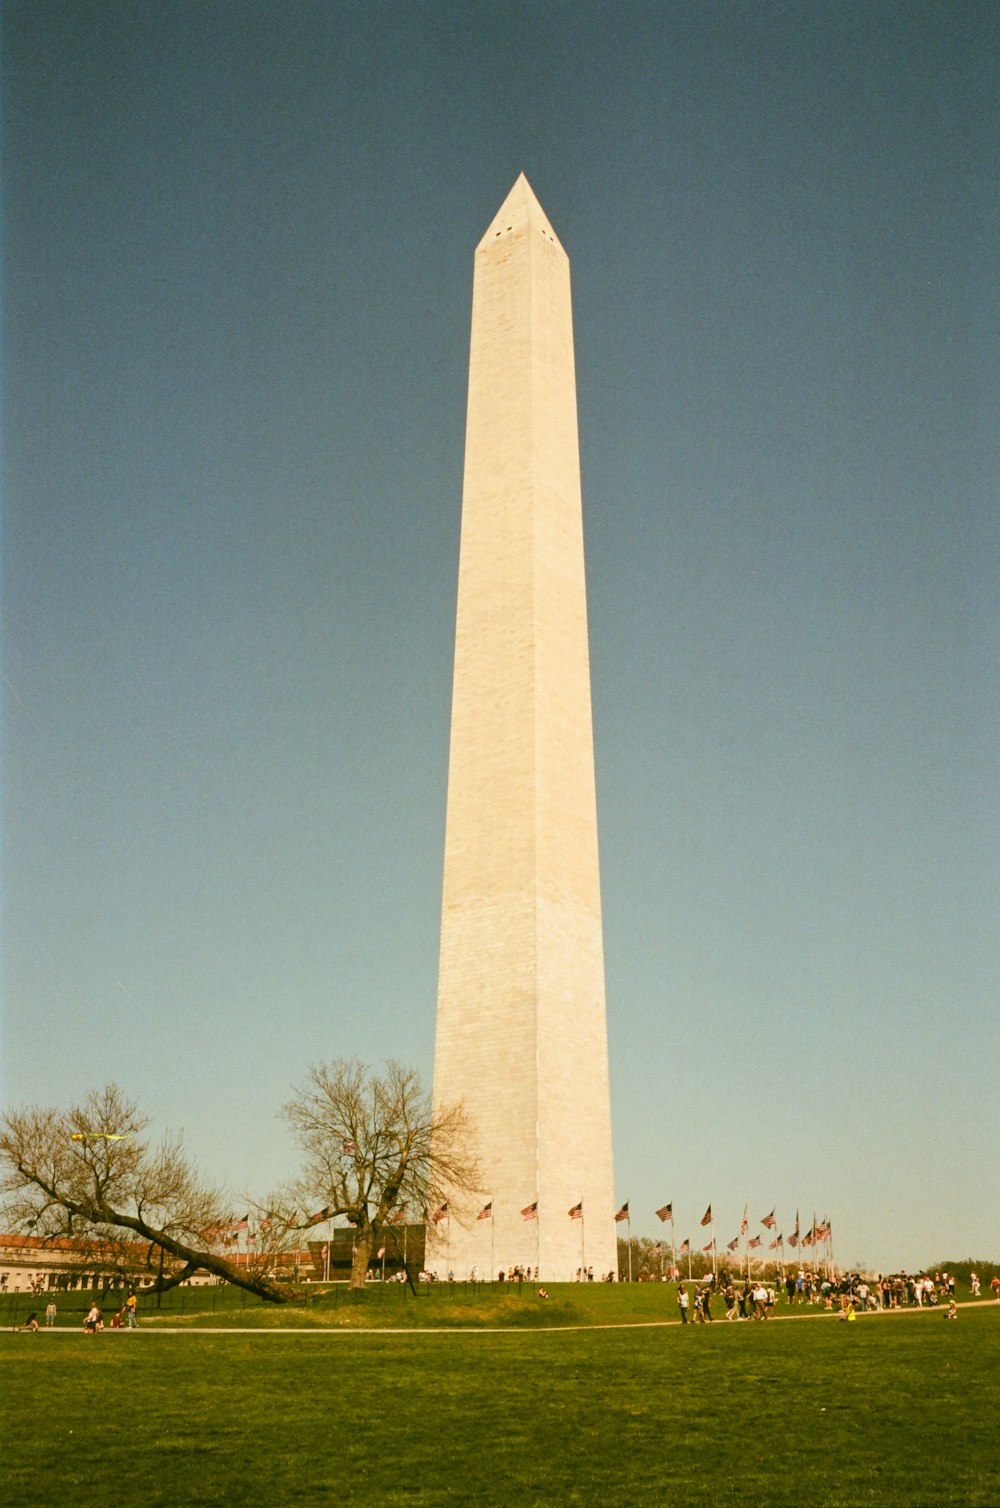 the washington monument in washington, dc